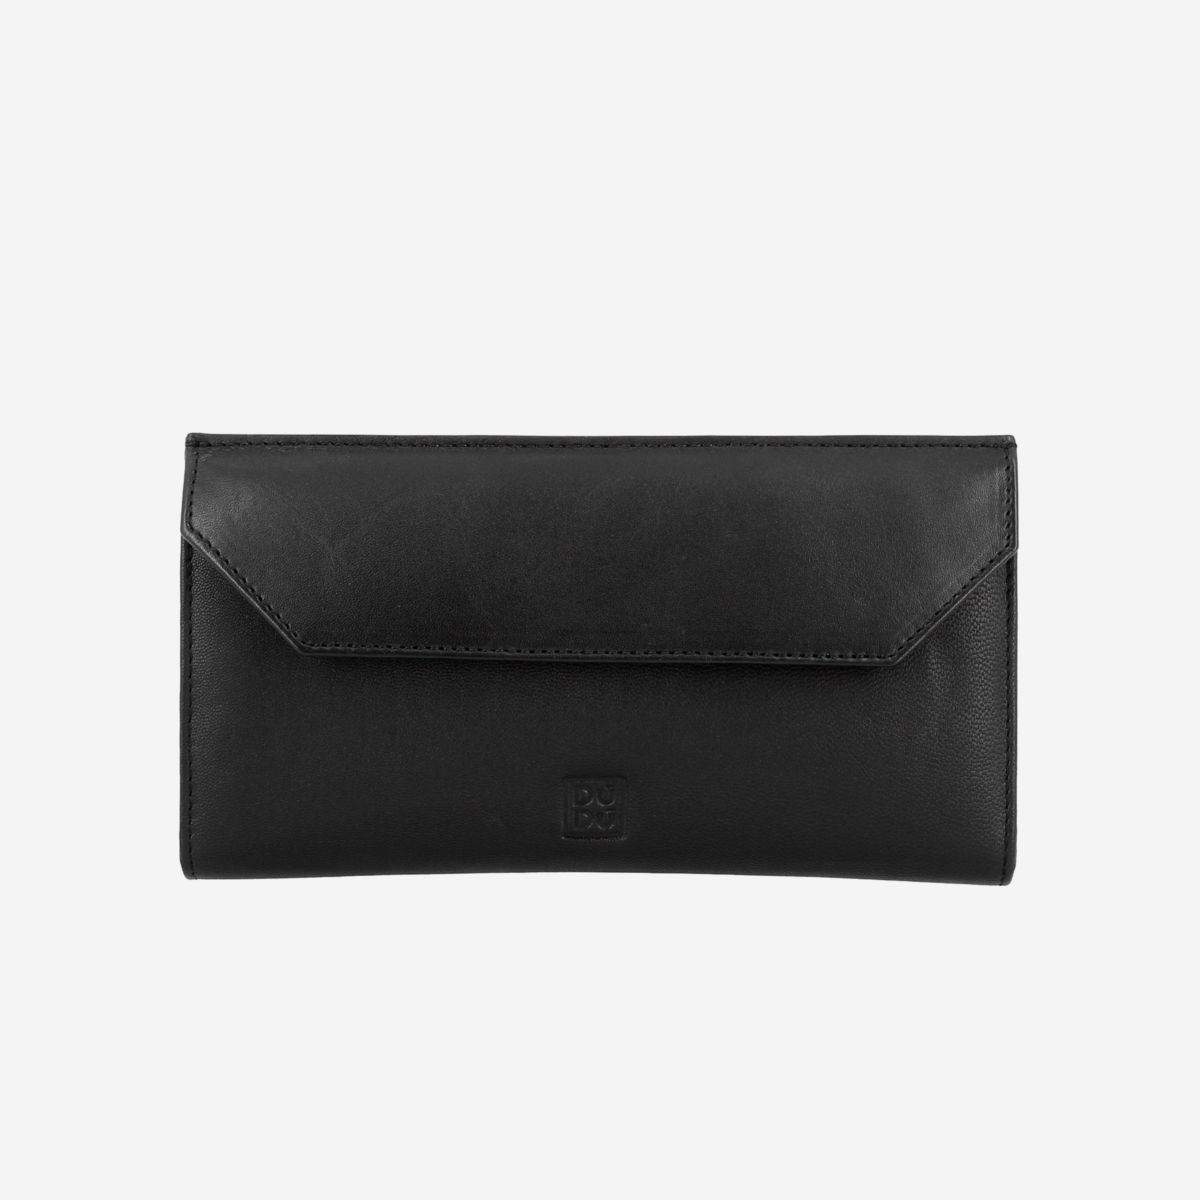 DuDu Ladies Envelope Leather Clutch Wallet Purse  - Black